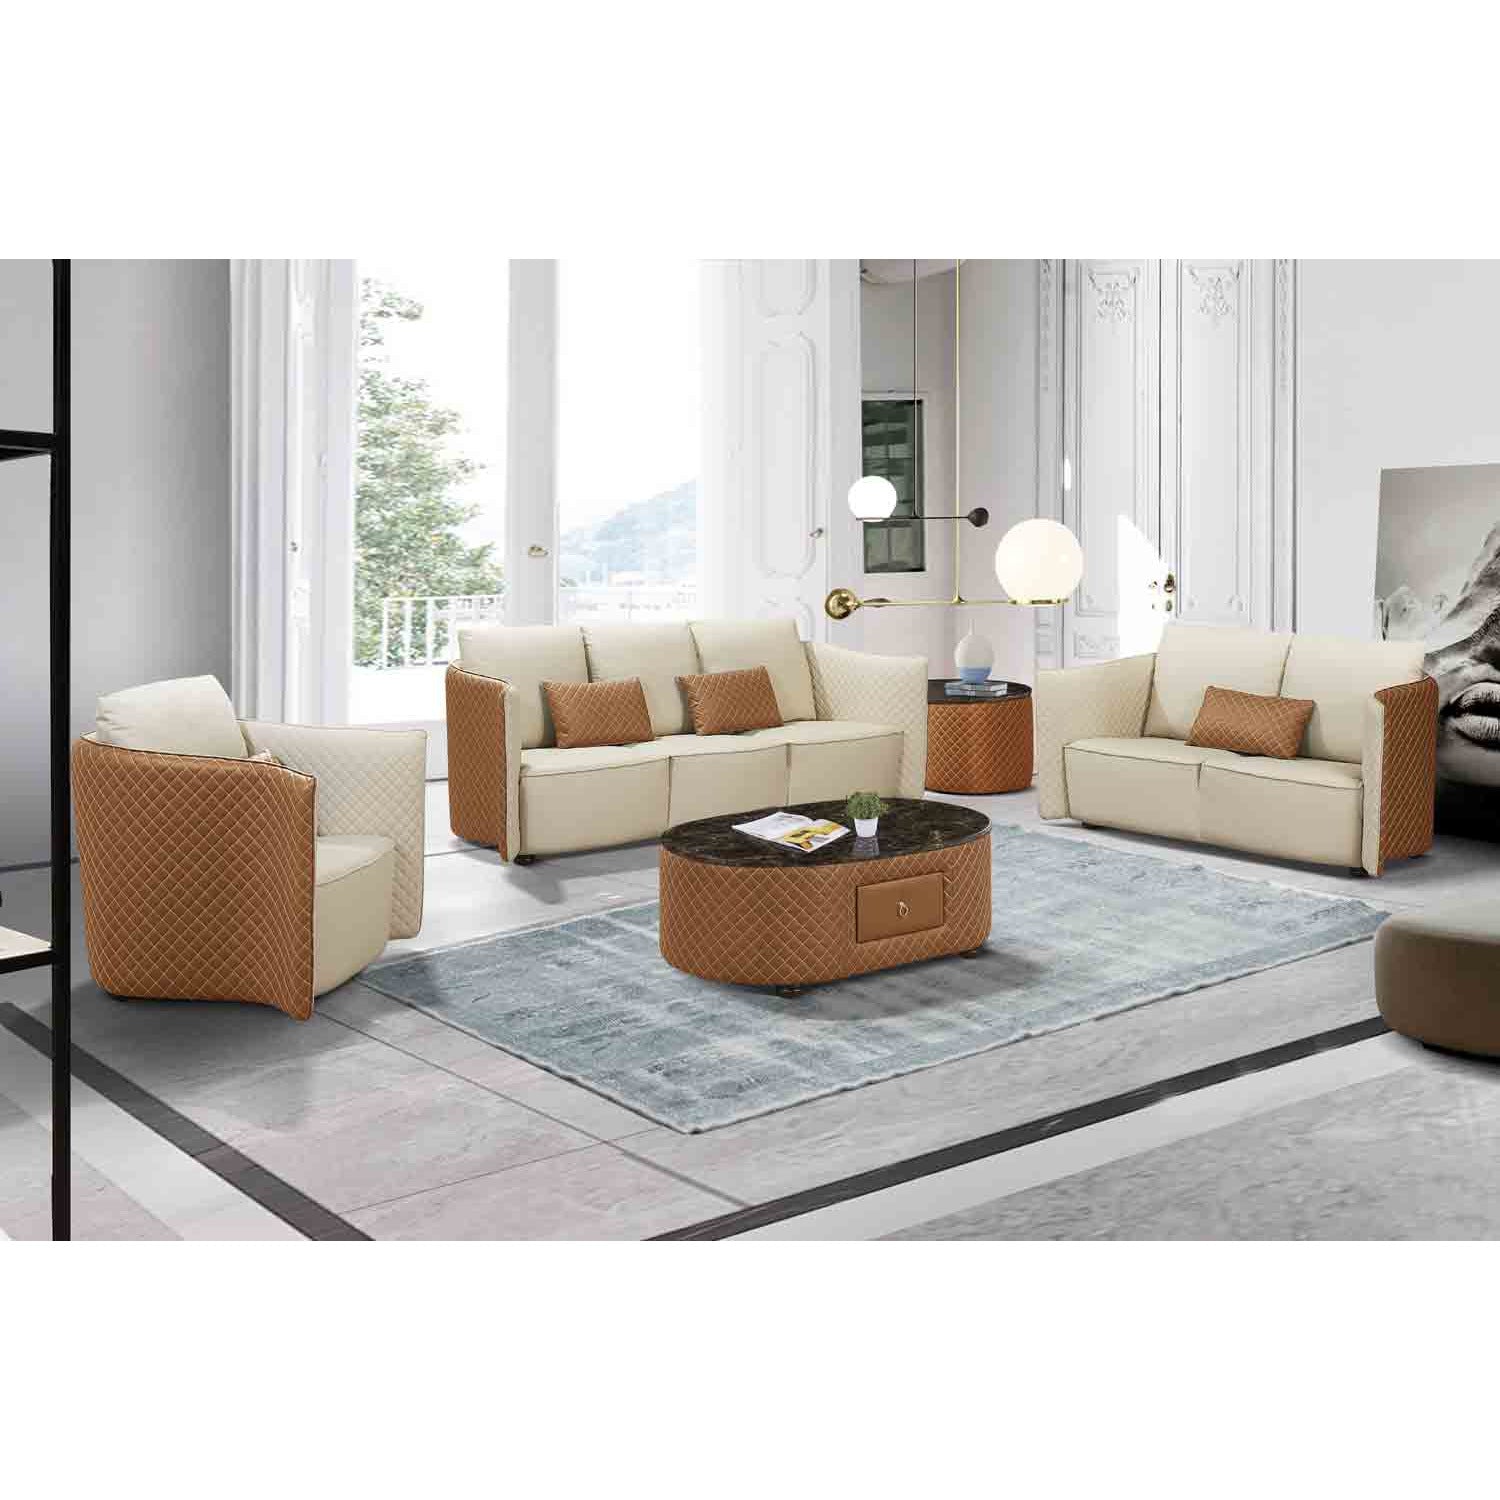 European Furniture - Makassar Sofa in Sand Beige & Orange - 52552-S - New Star Living